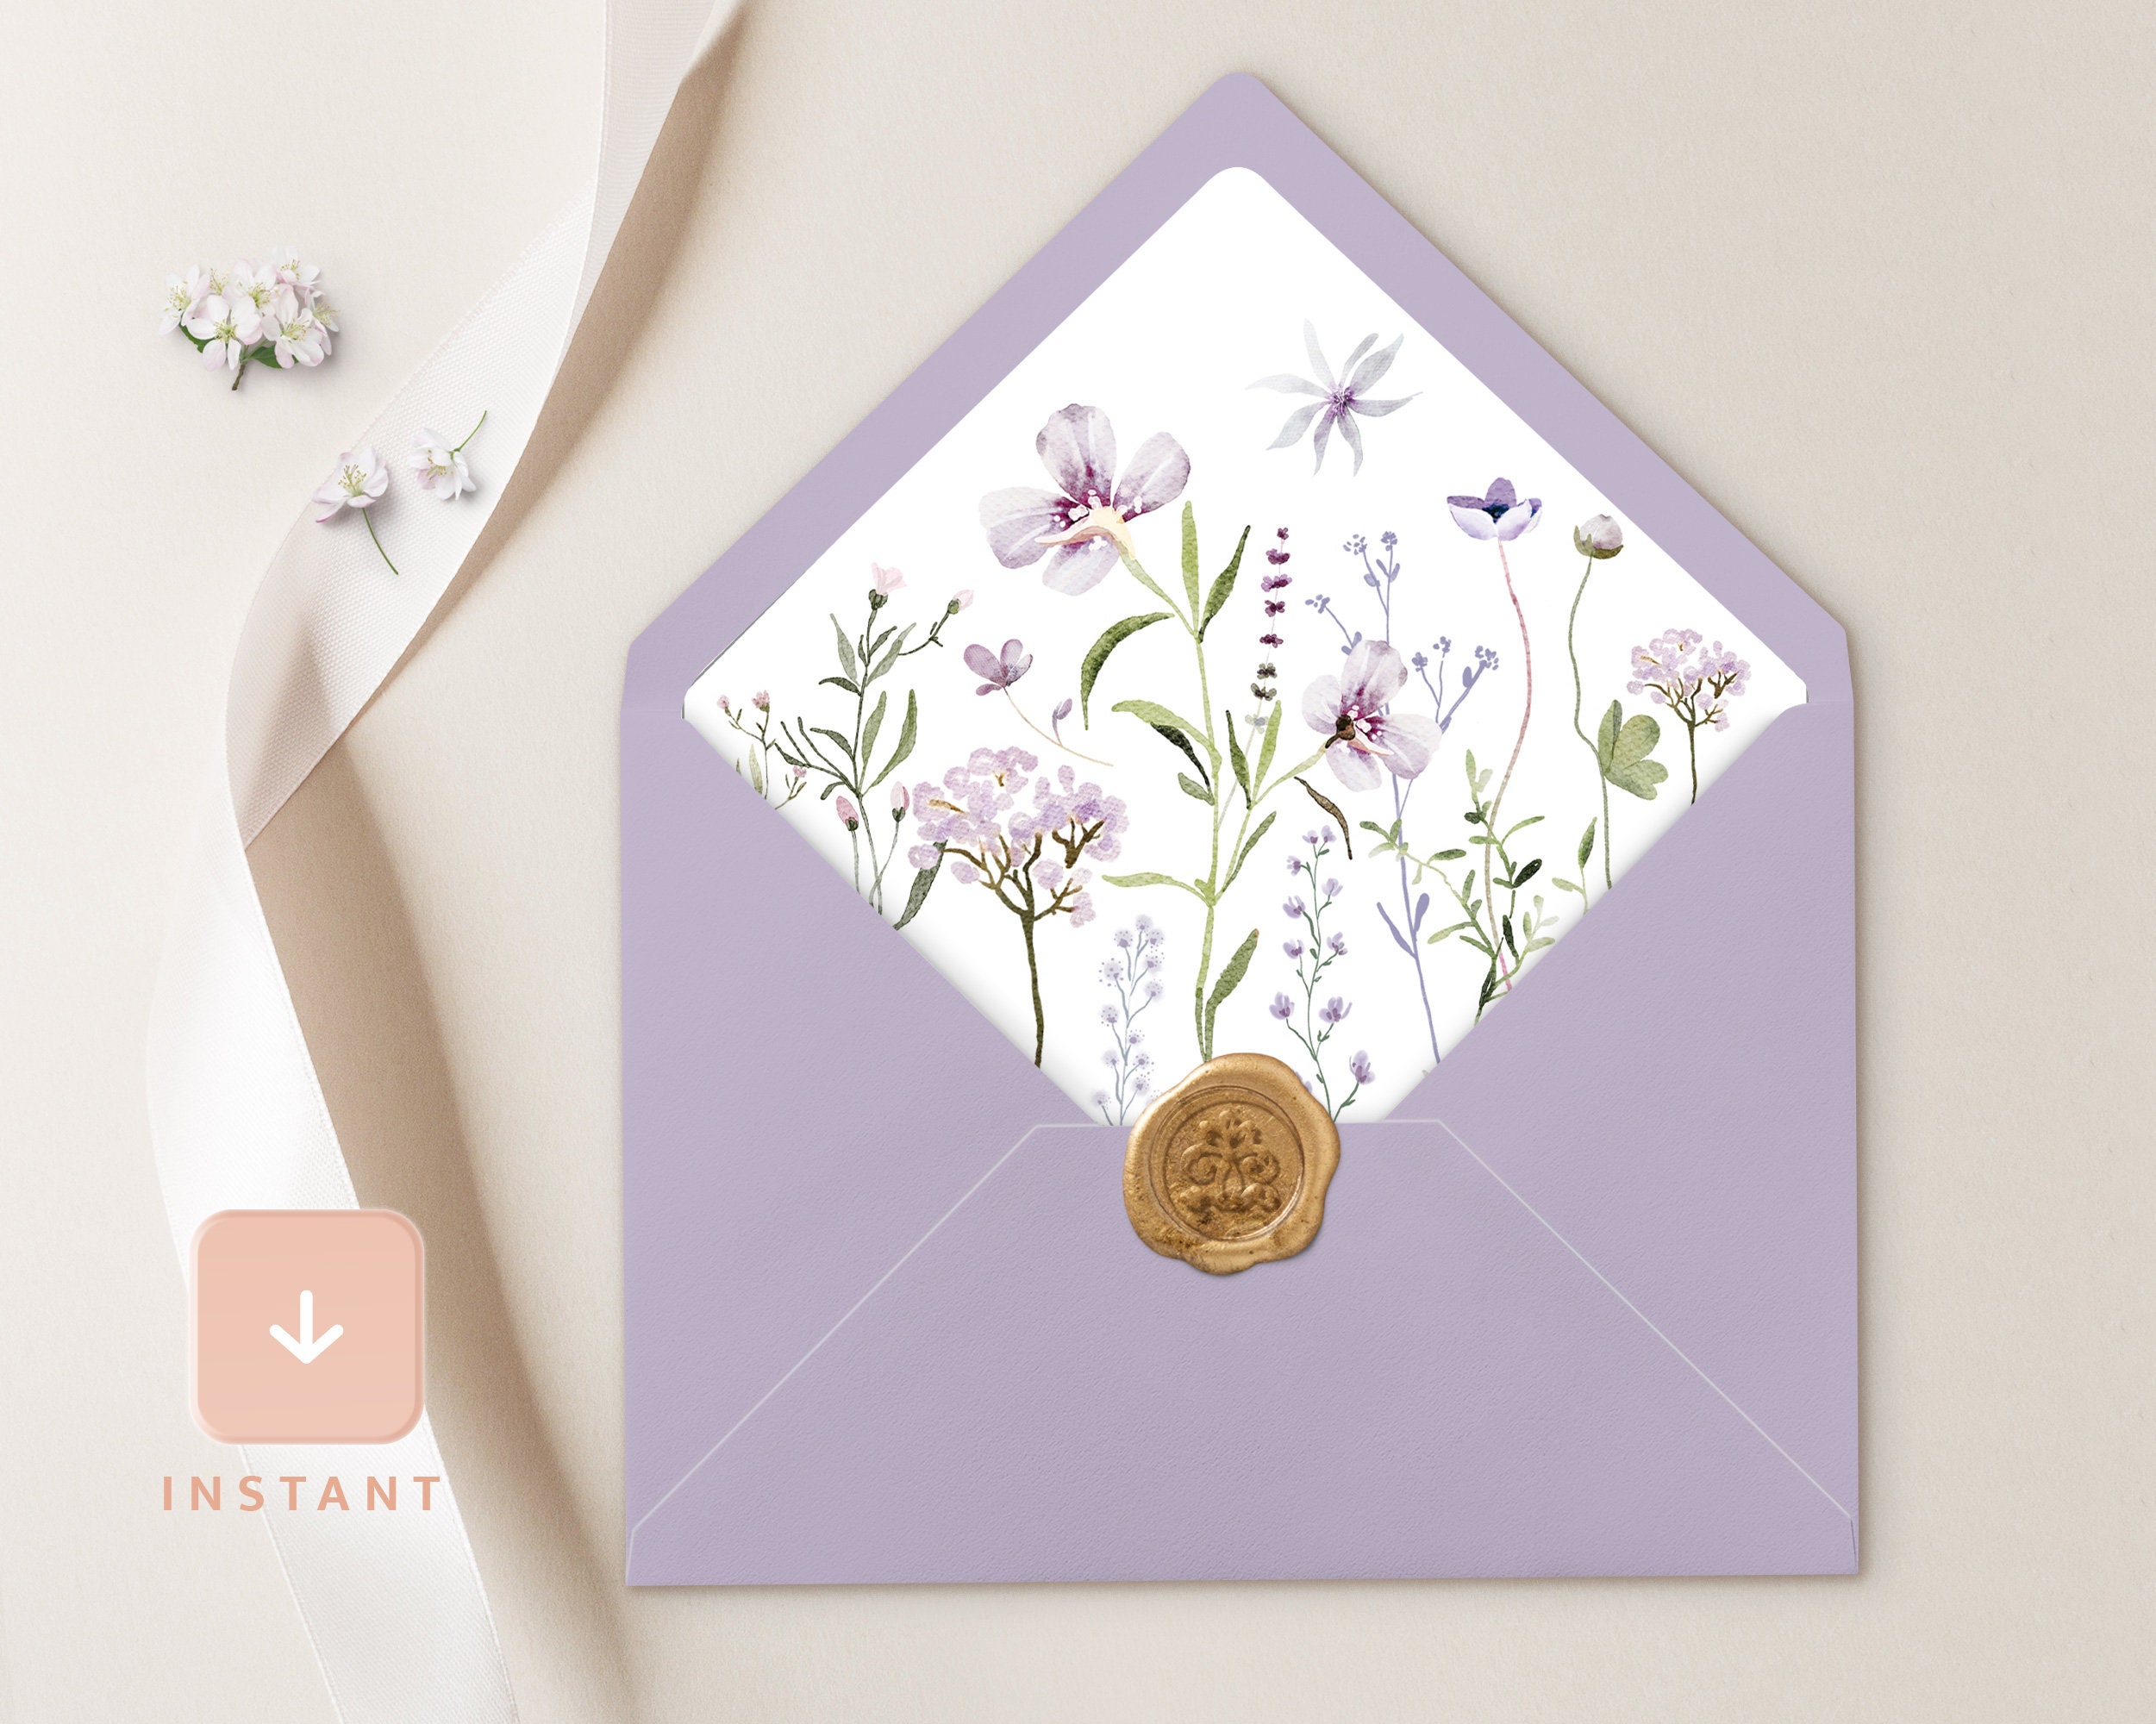 KRISMYA 100Pcs Vellum Paper Envelopes for Greeting Cards,A7 Translucent  Vellum Envelopes for Weddings, Invitations, Announcements, Photos,  Graduation